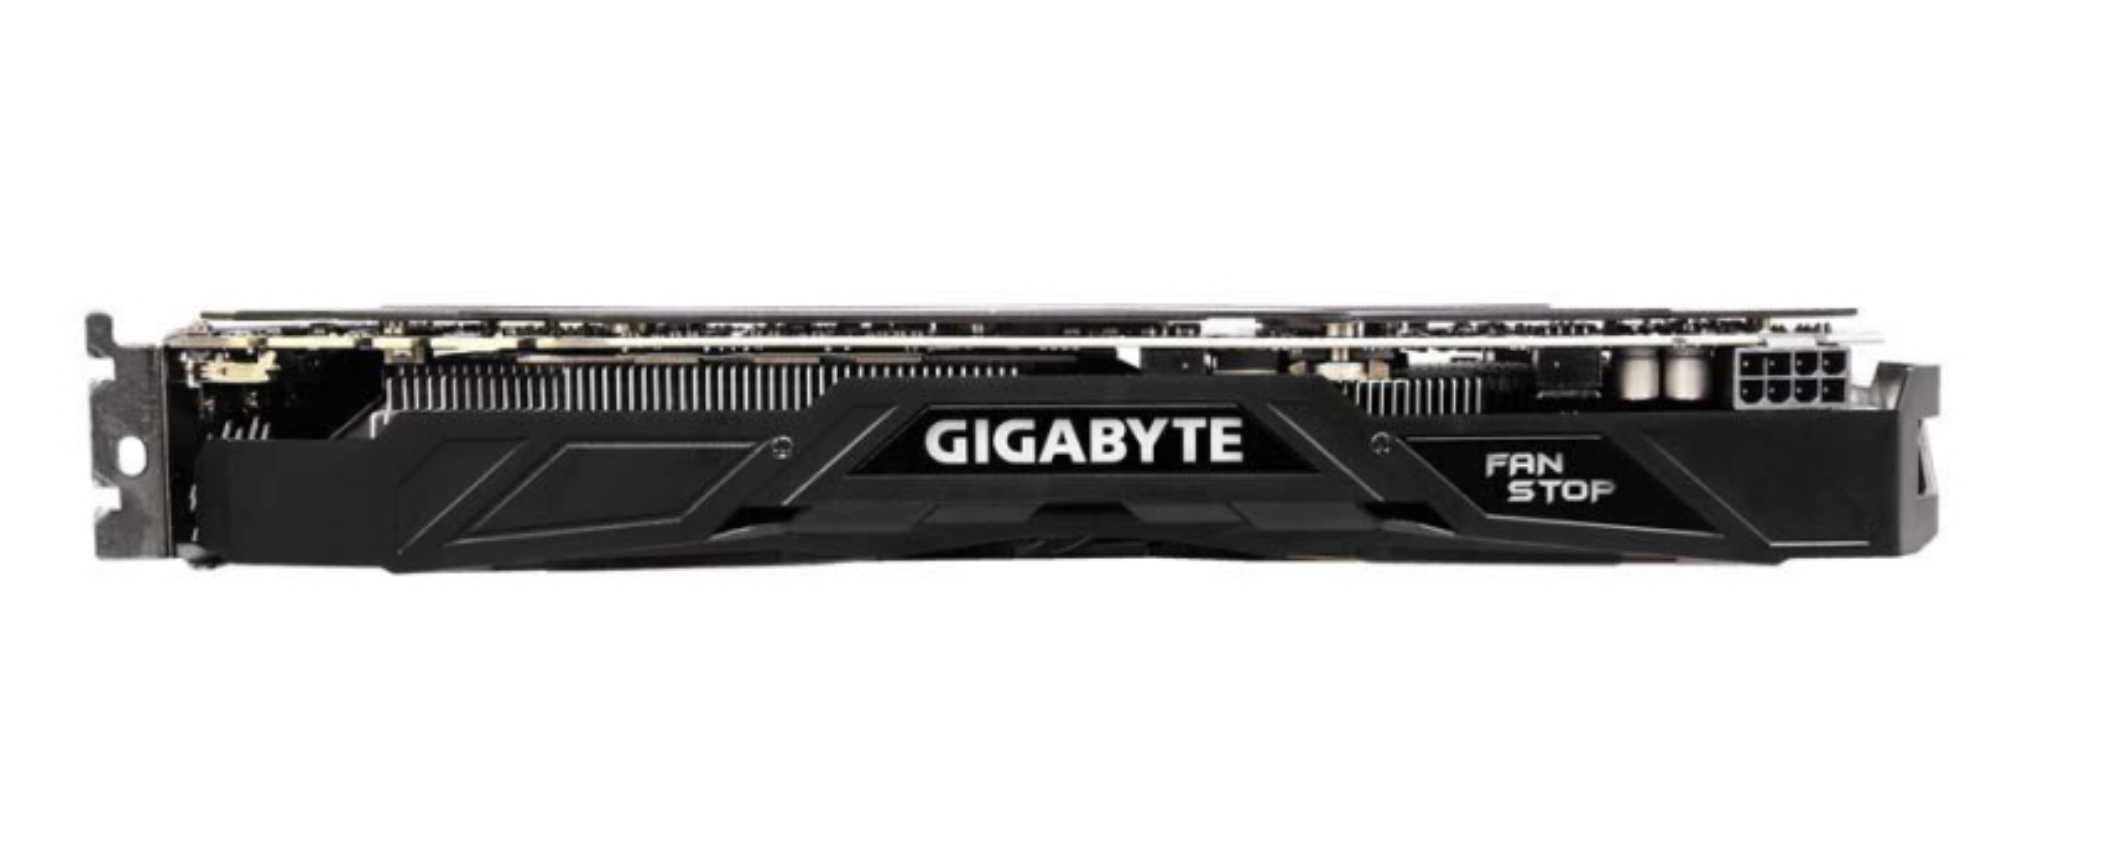 Gigabyte GeForce GTX 1080 G1 Gaming 8GB Poznań, Tarnowo Podgórne, Gwar